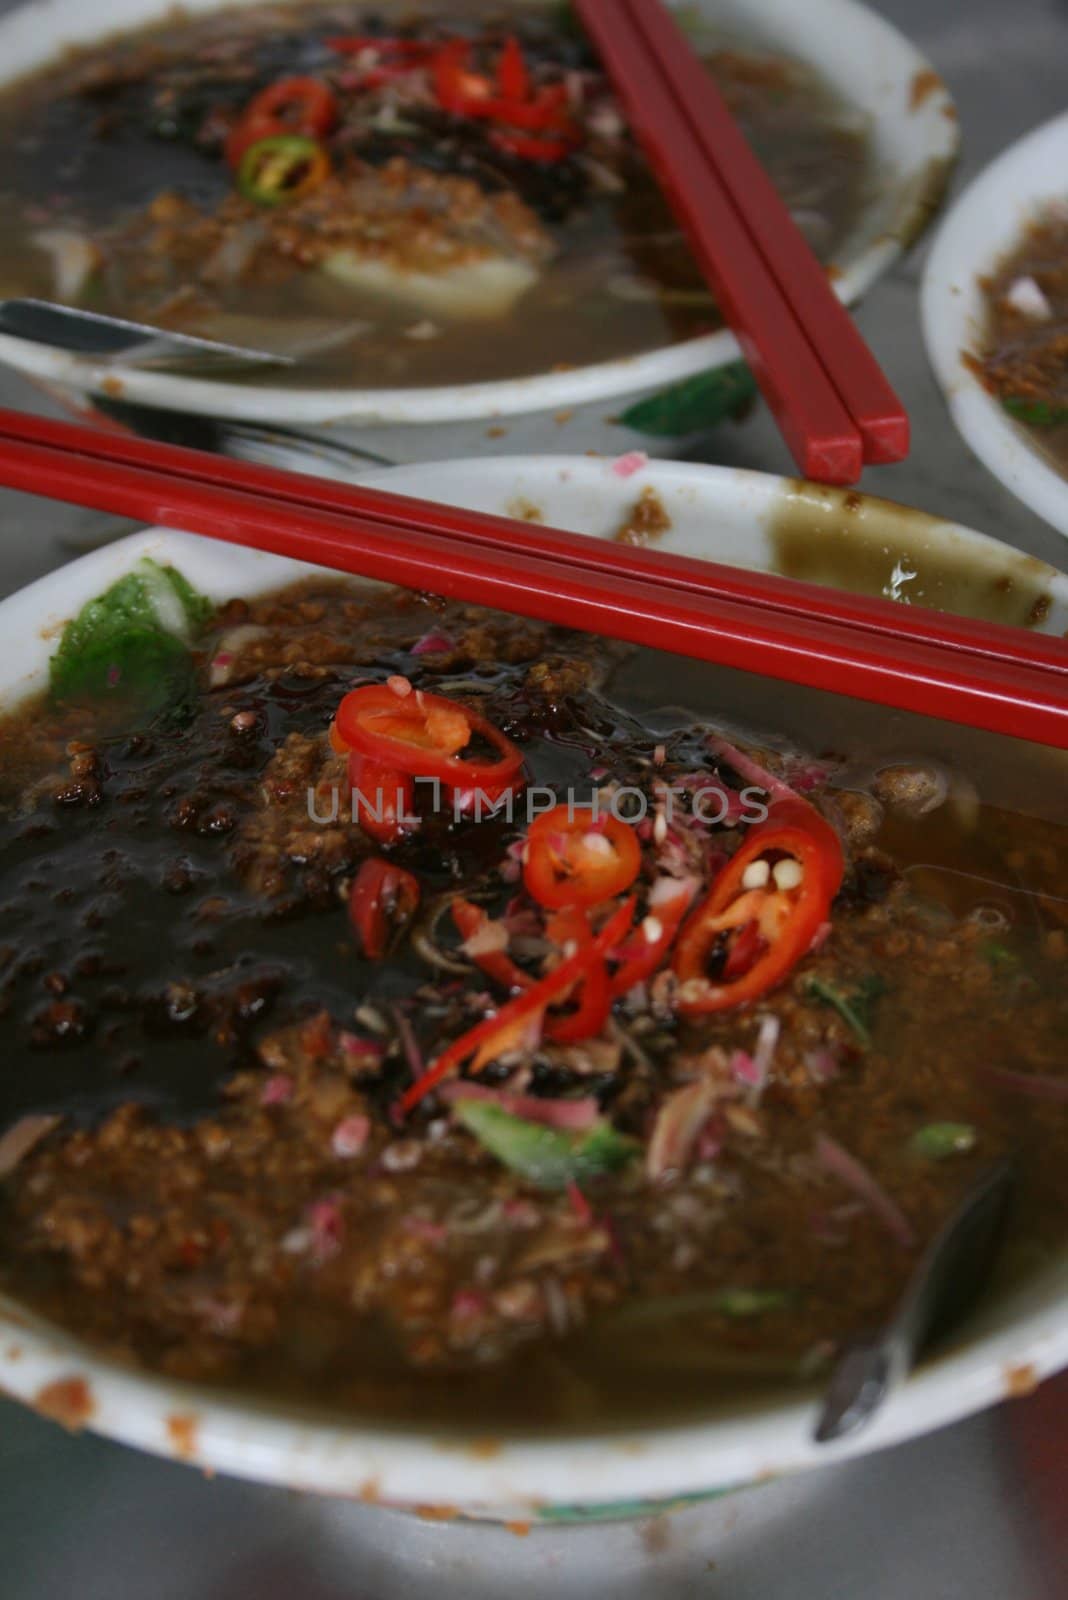 Penang Laksa a famous food in Malaysia.